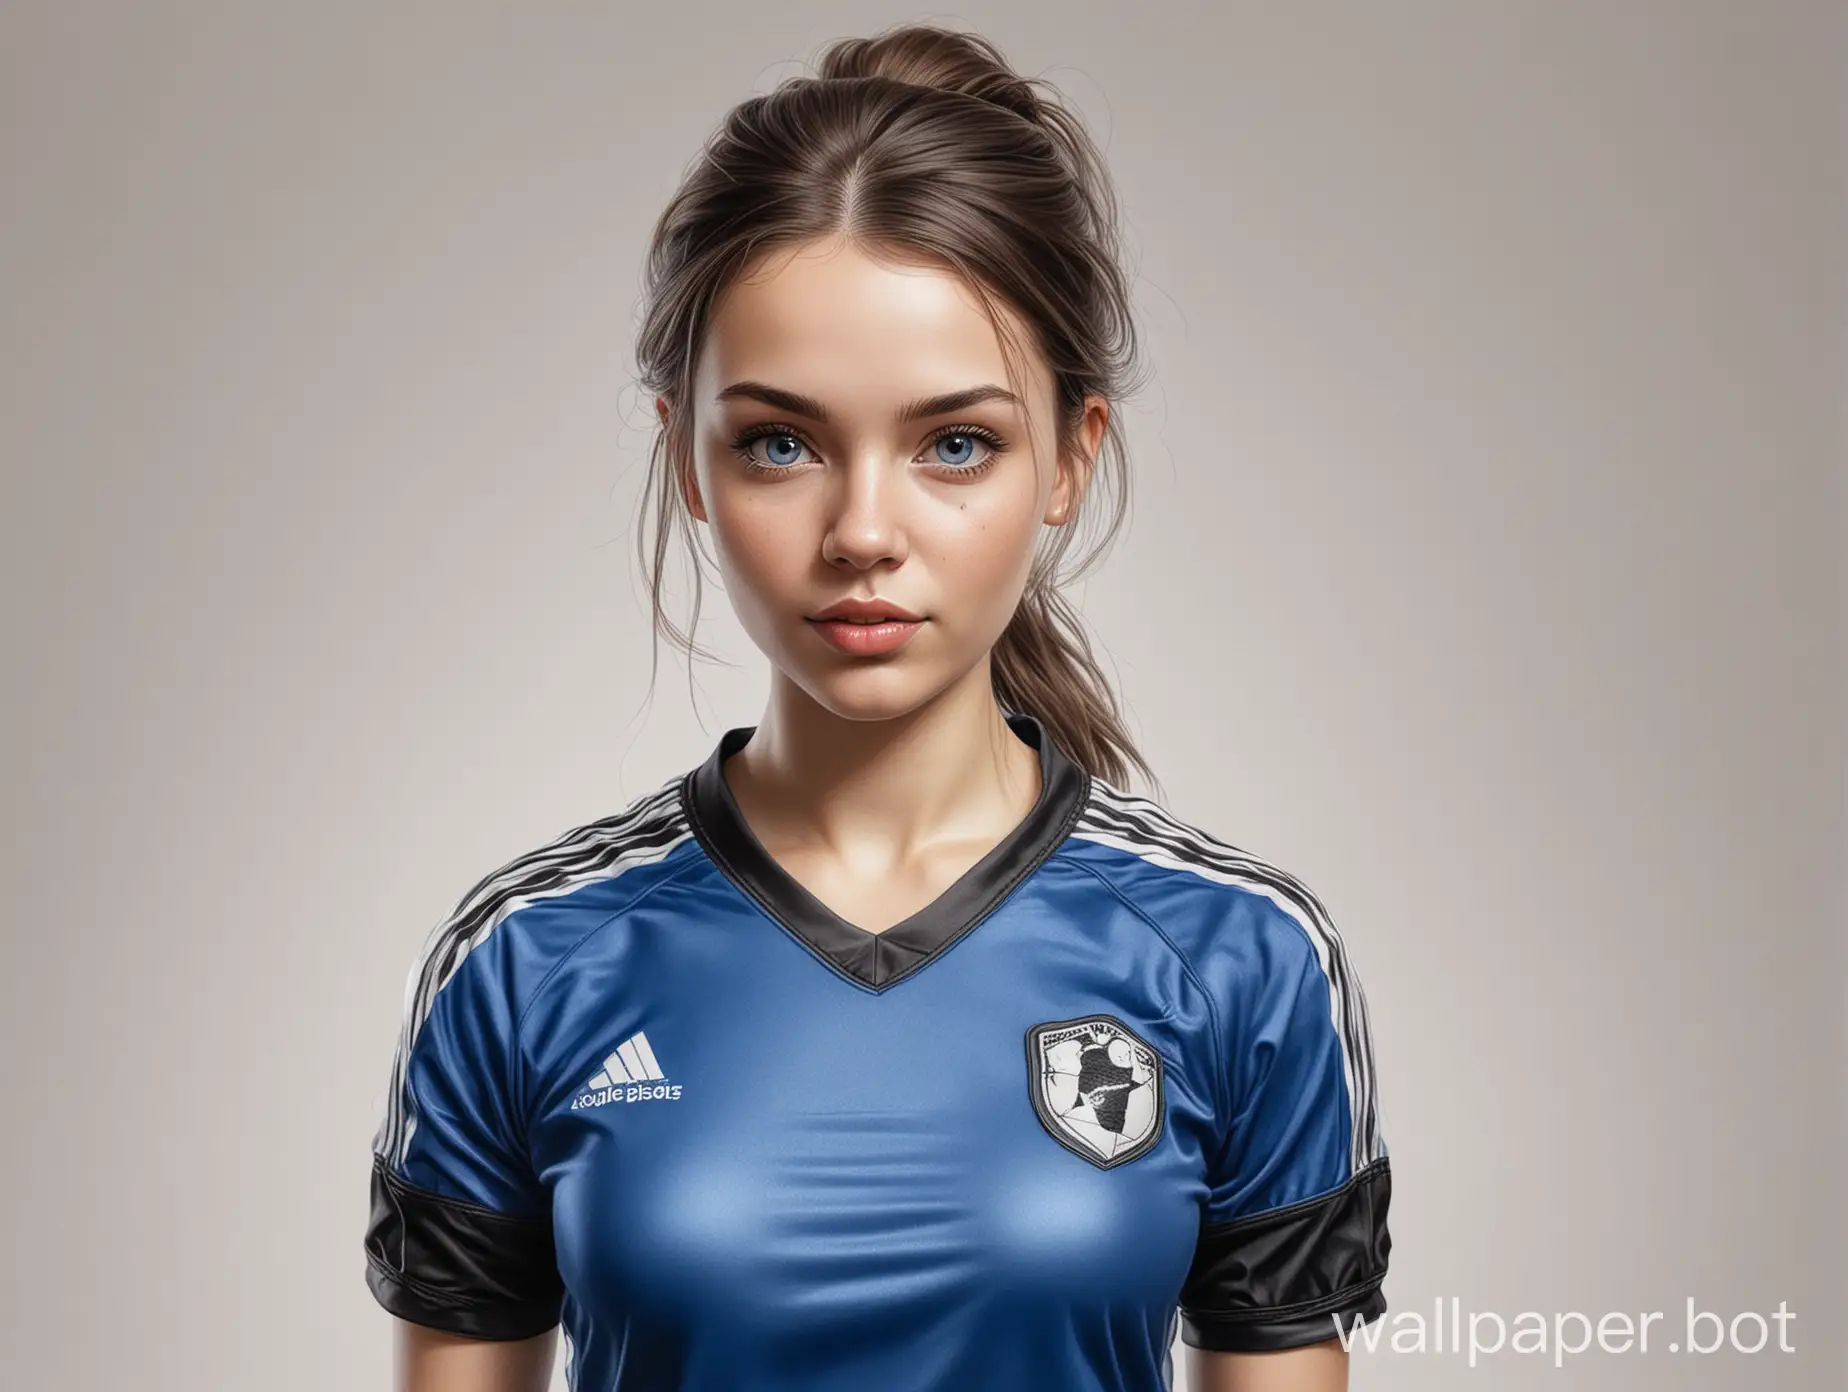 Realistic-Sketch-Julia-Snigir-Portrait-in-Soccer-Uniform